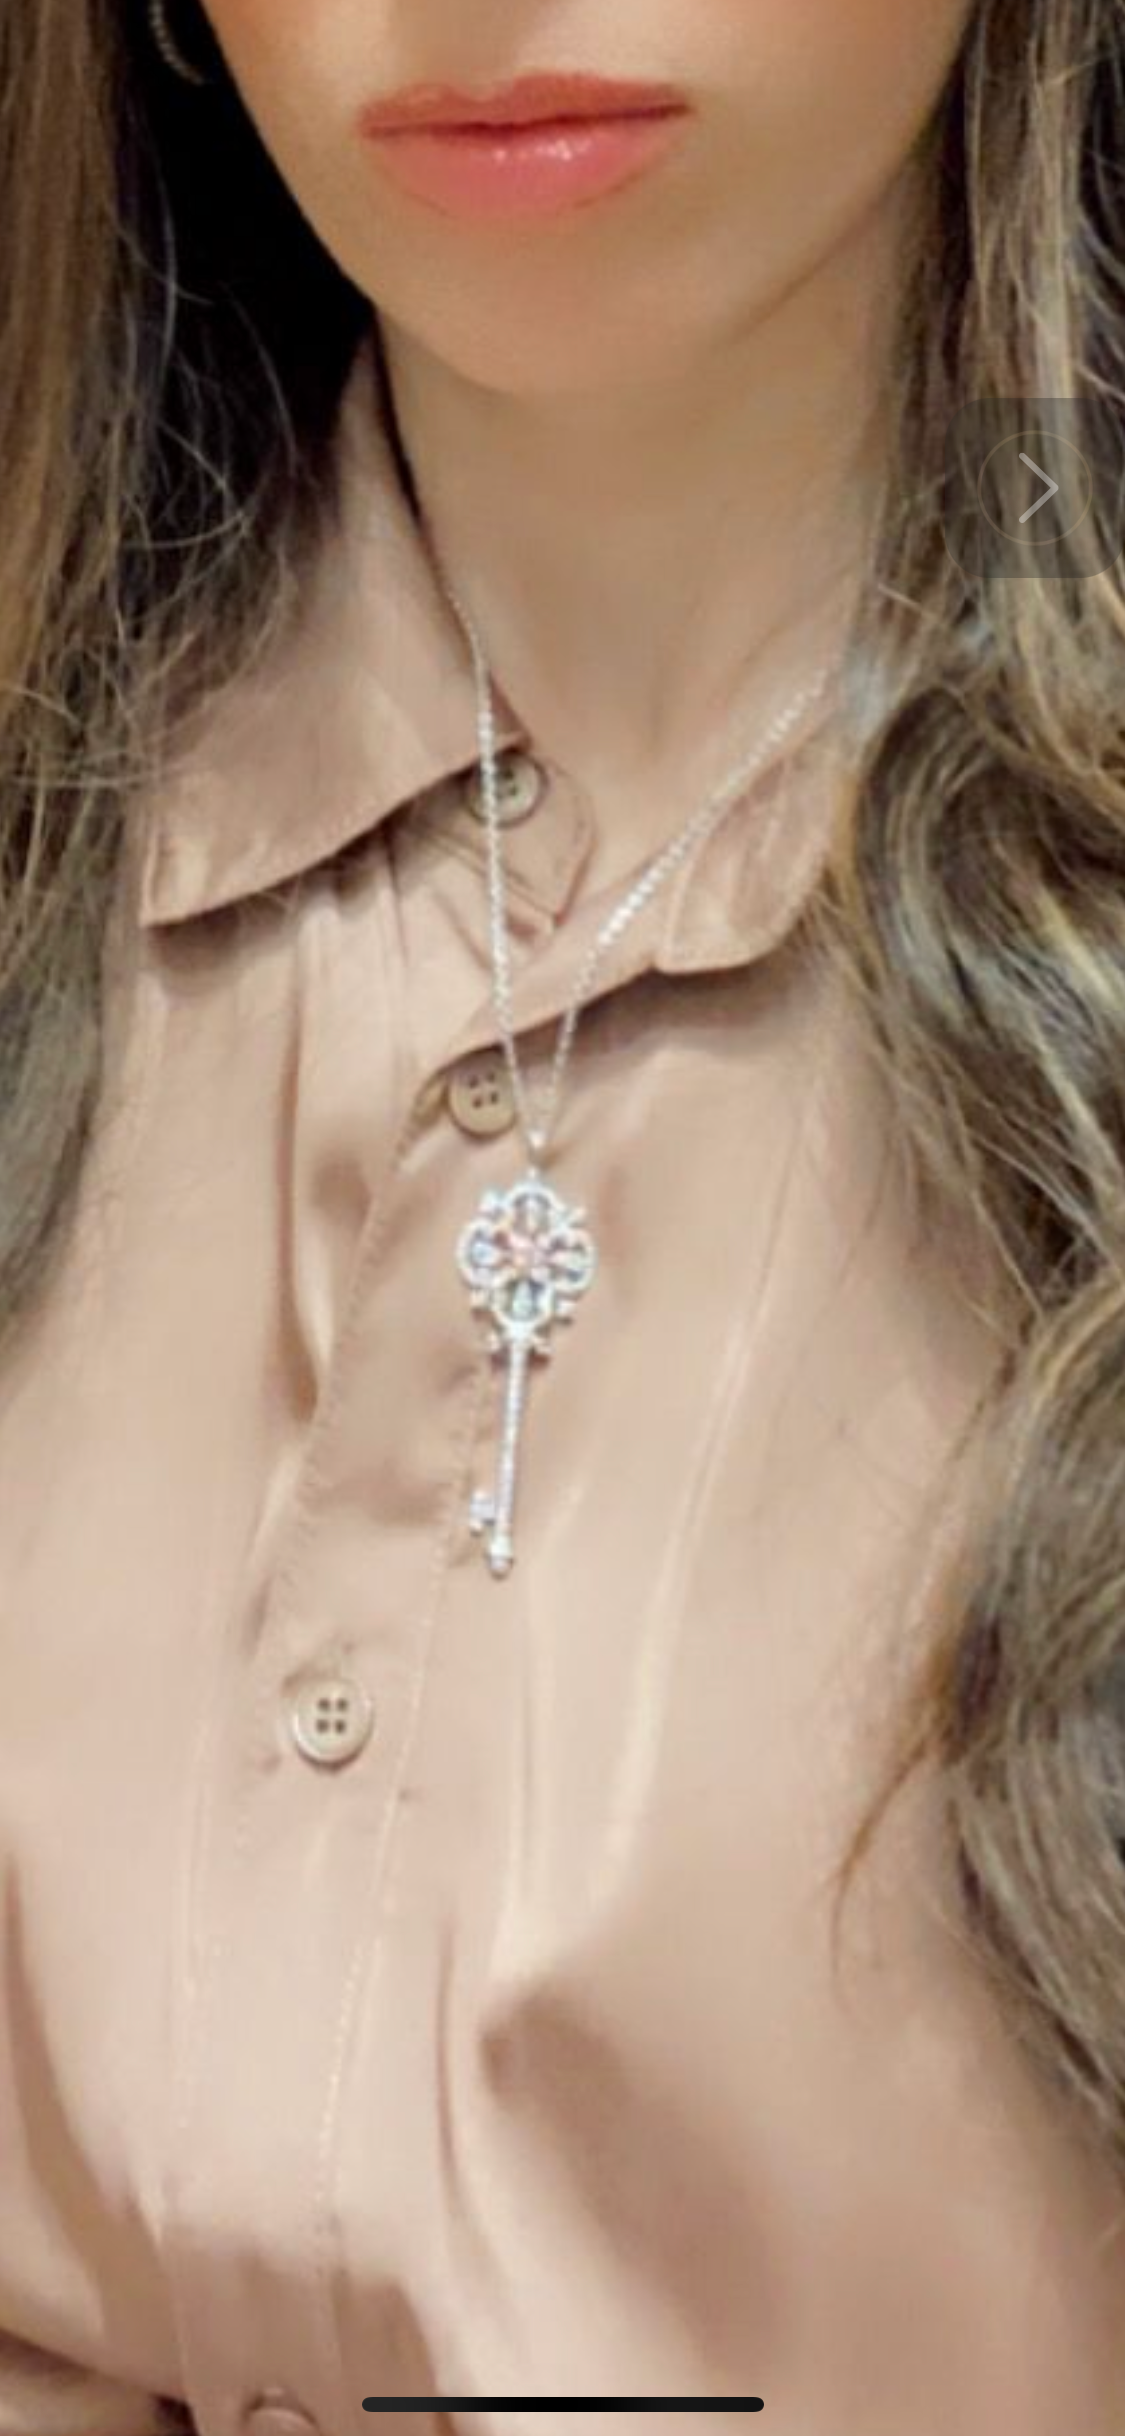 Tiffany Keys knot key in 18k rose gold with diamonds.